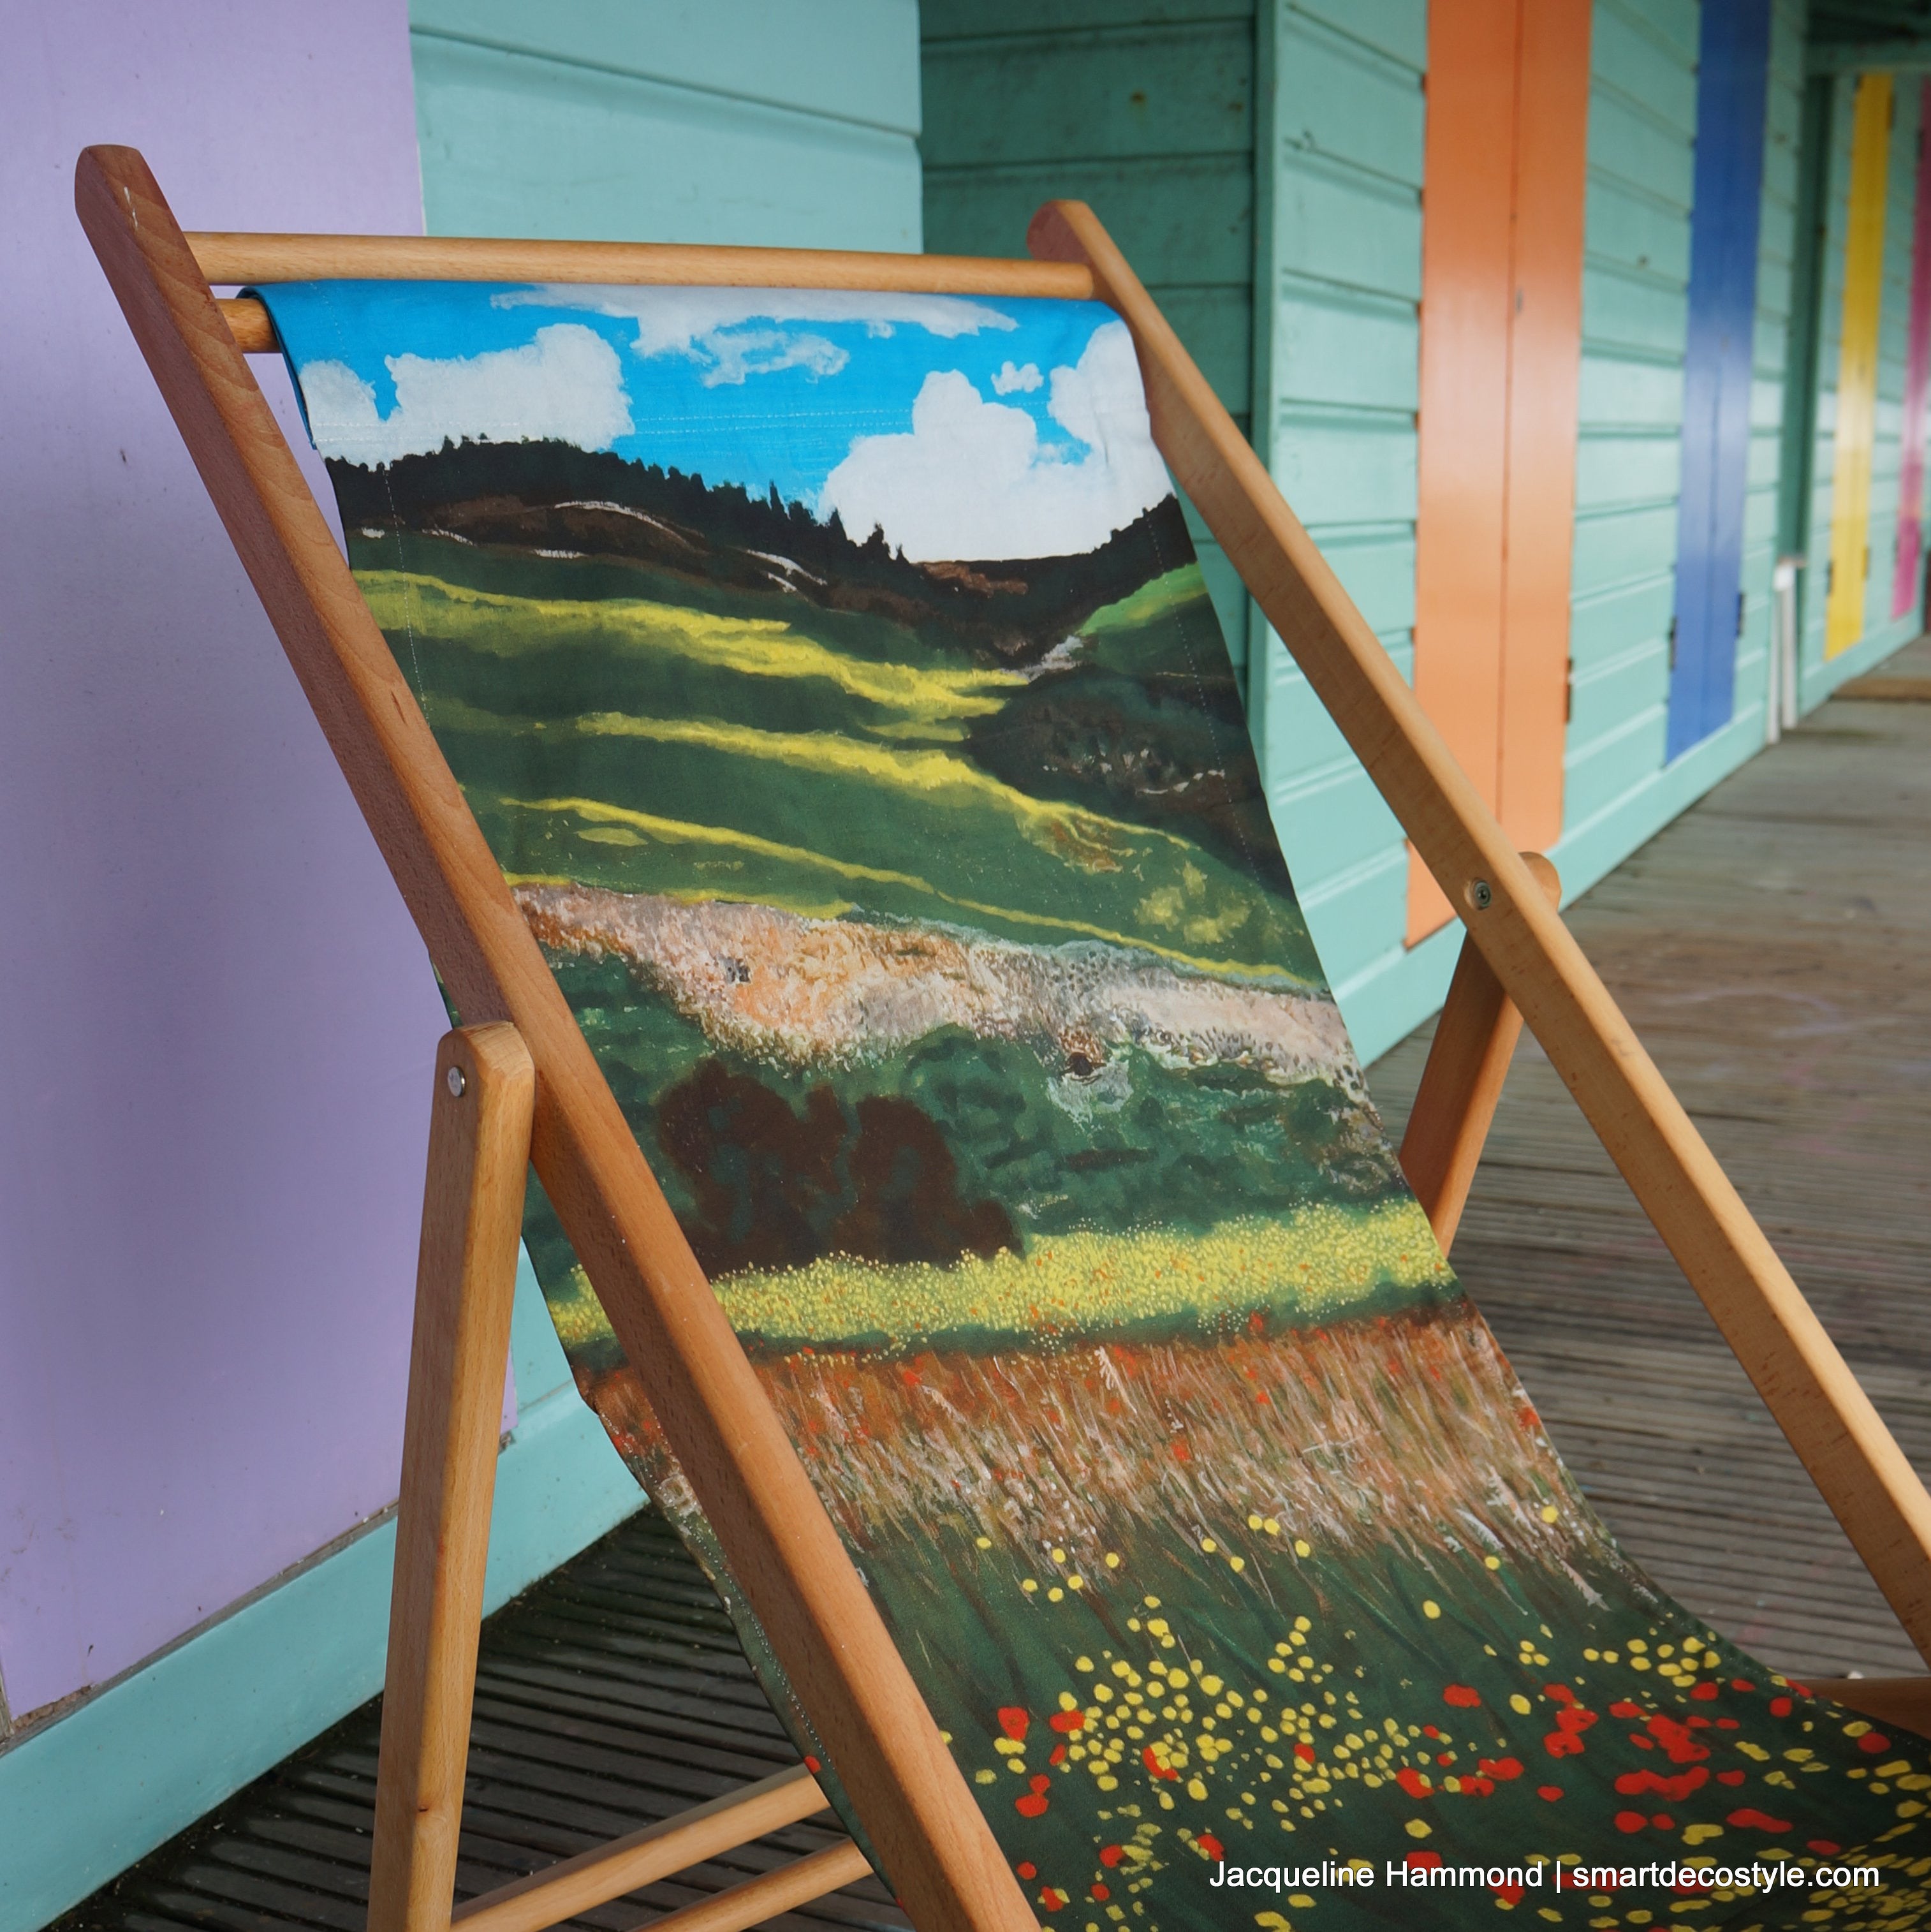 Deckchair - Traditional Seaside - Santa Fe Fields  Smart Deco Homeware Lighting and Art by Jacqueline hammond